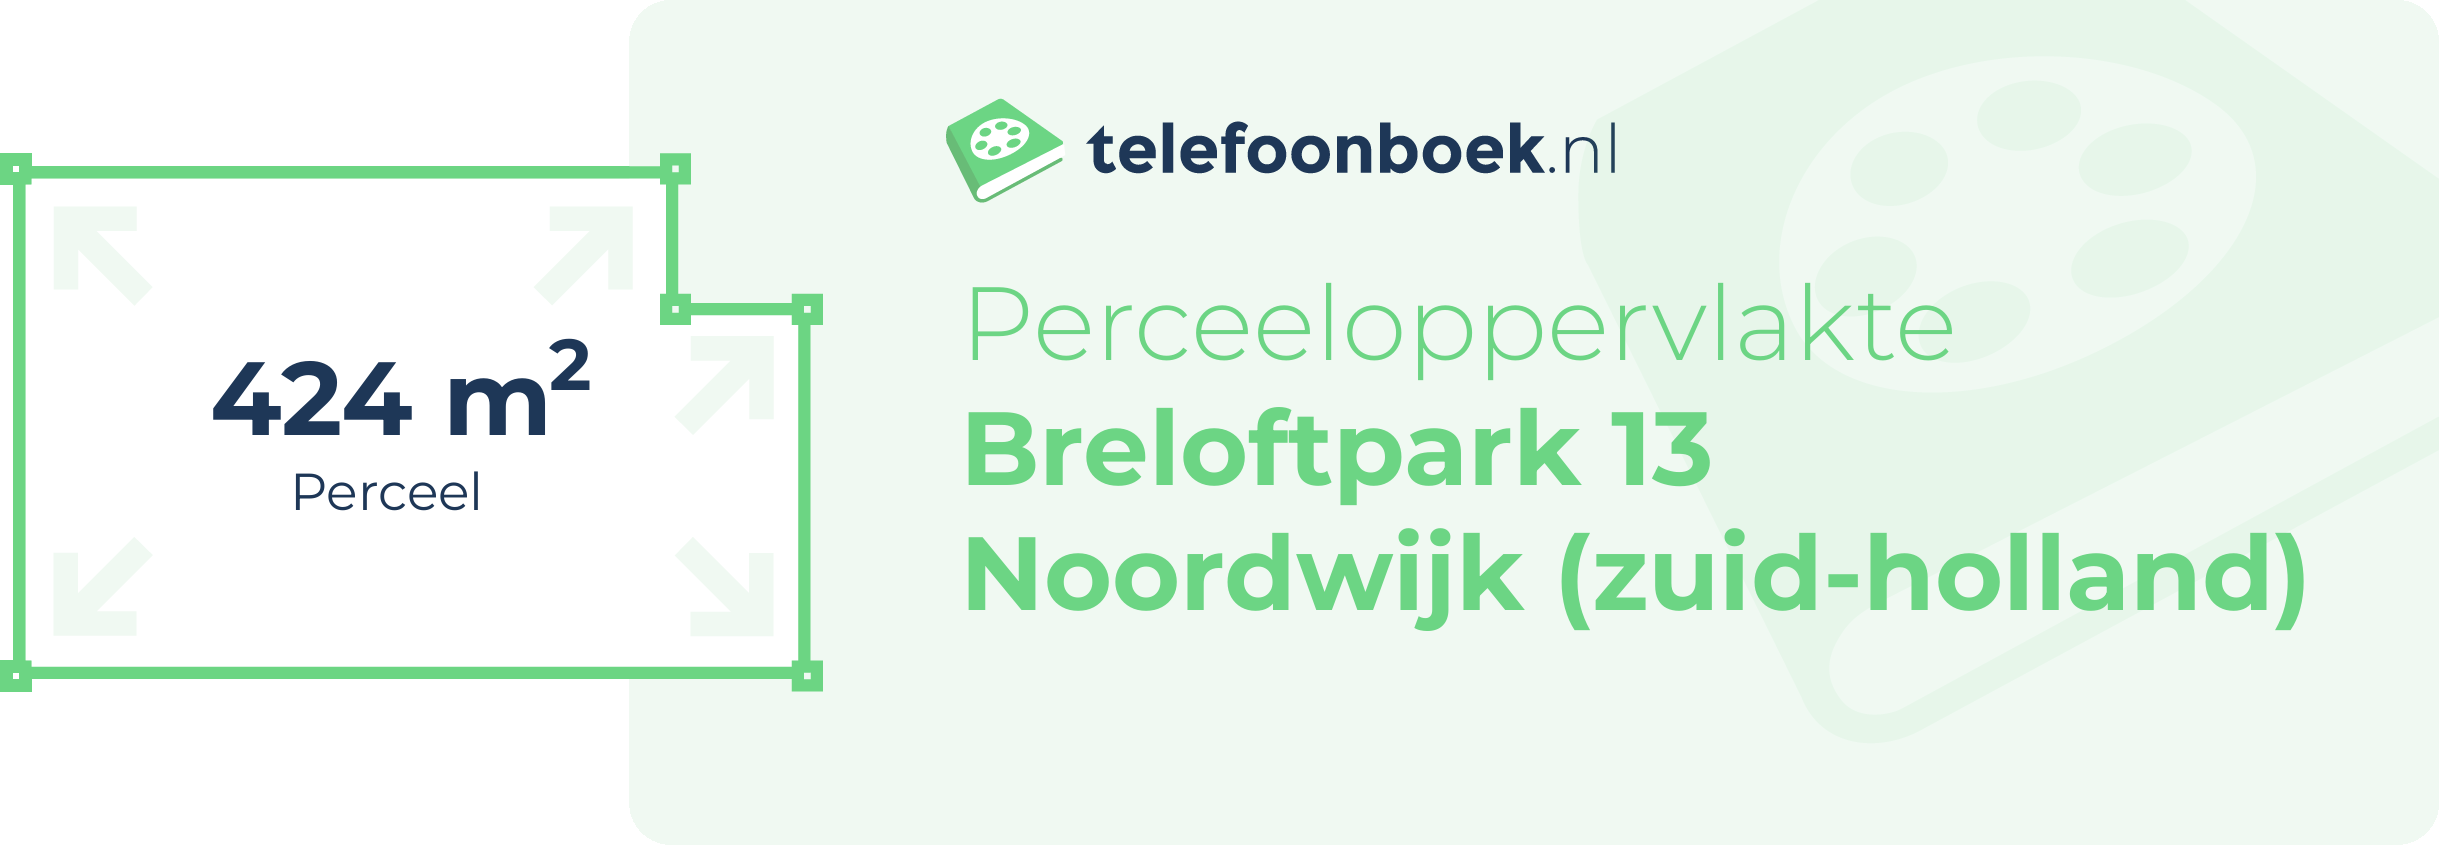 Perceeloppervlakte Breloftpark 13 Noordwijk (Zuid-Holland)